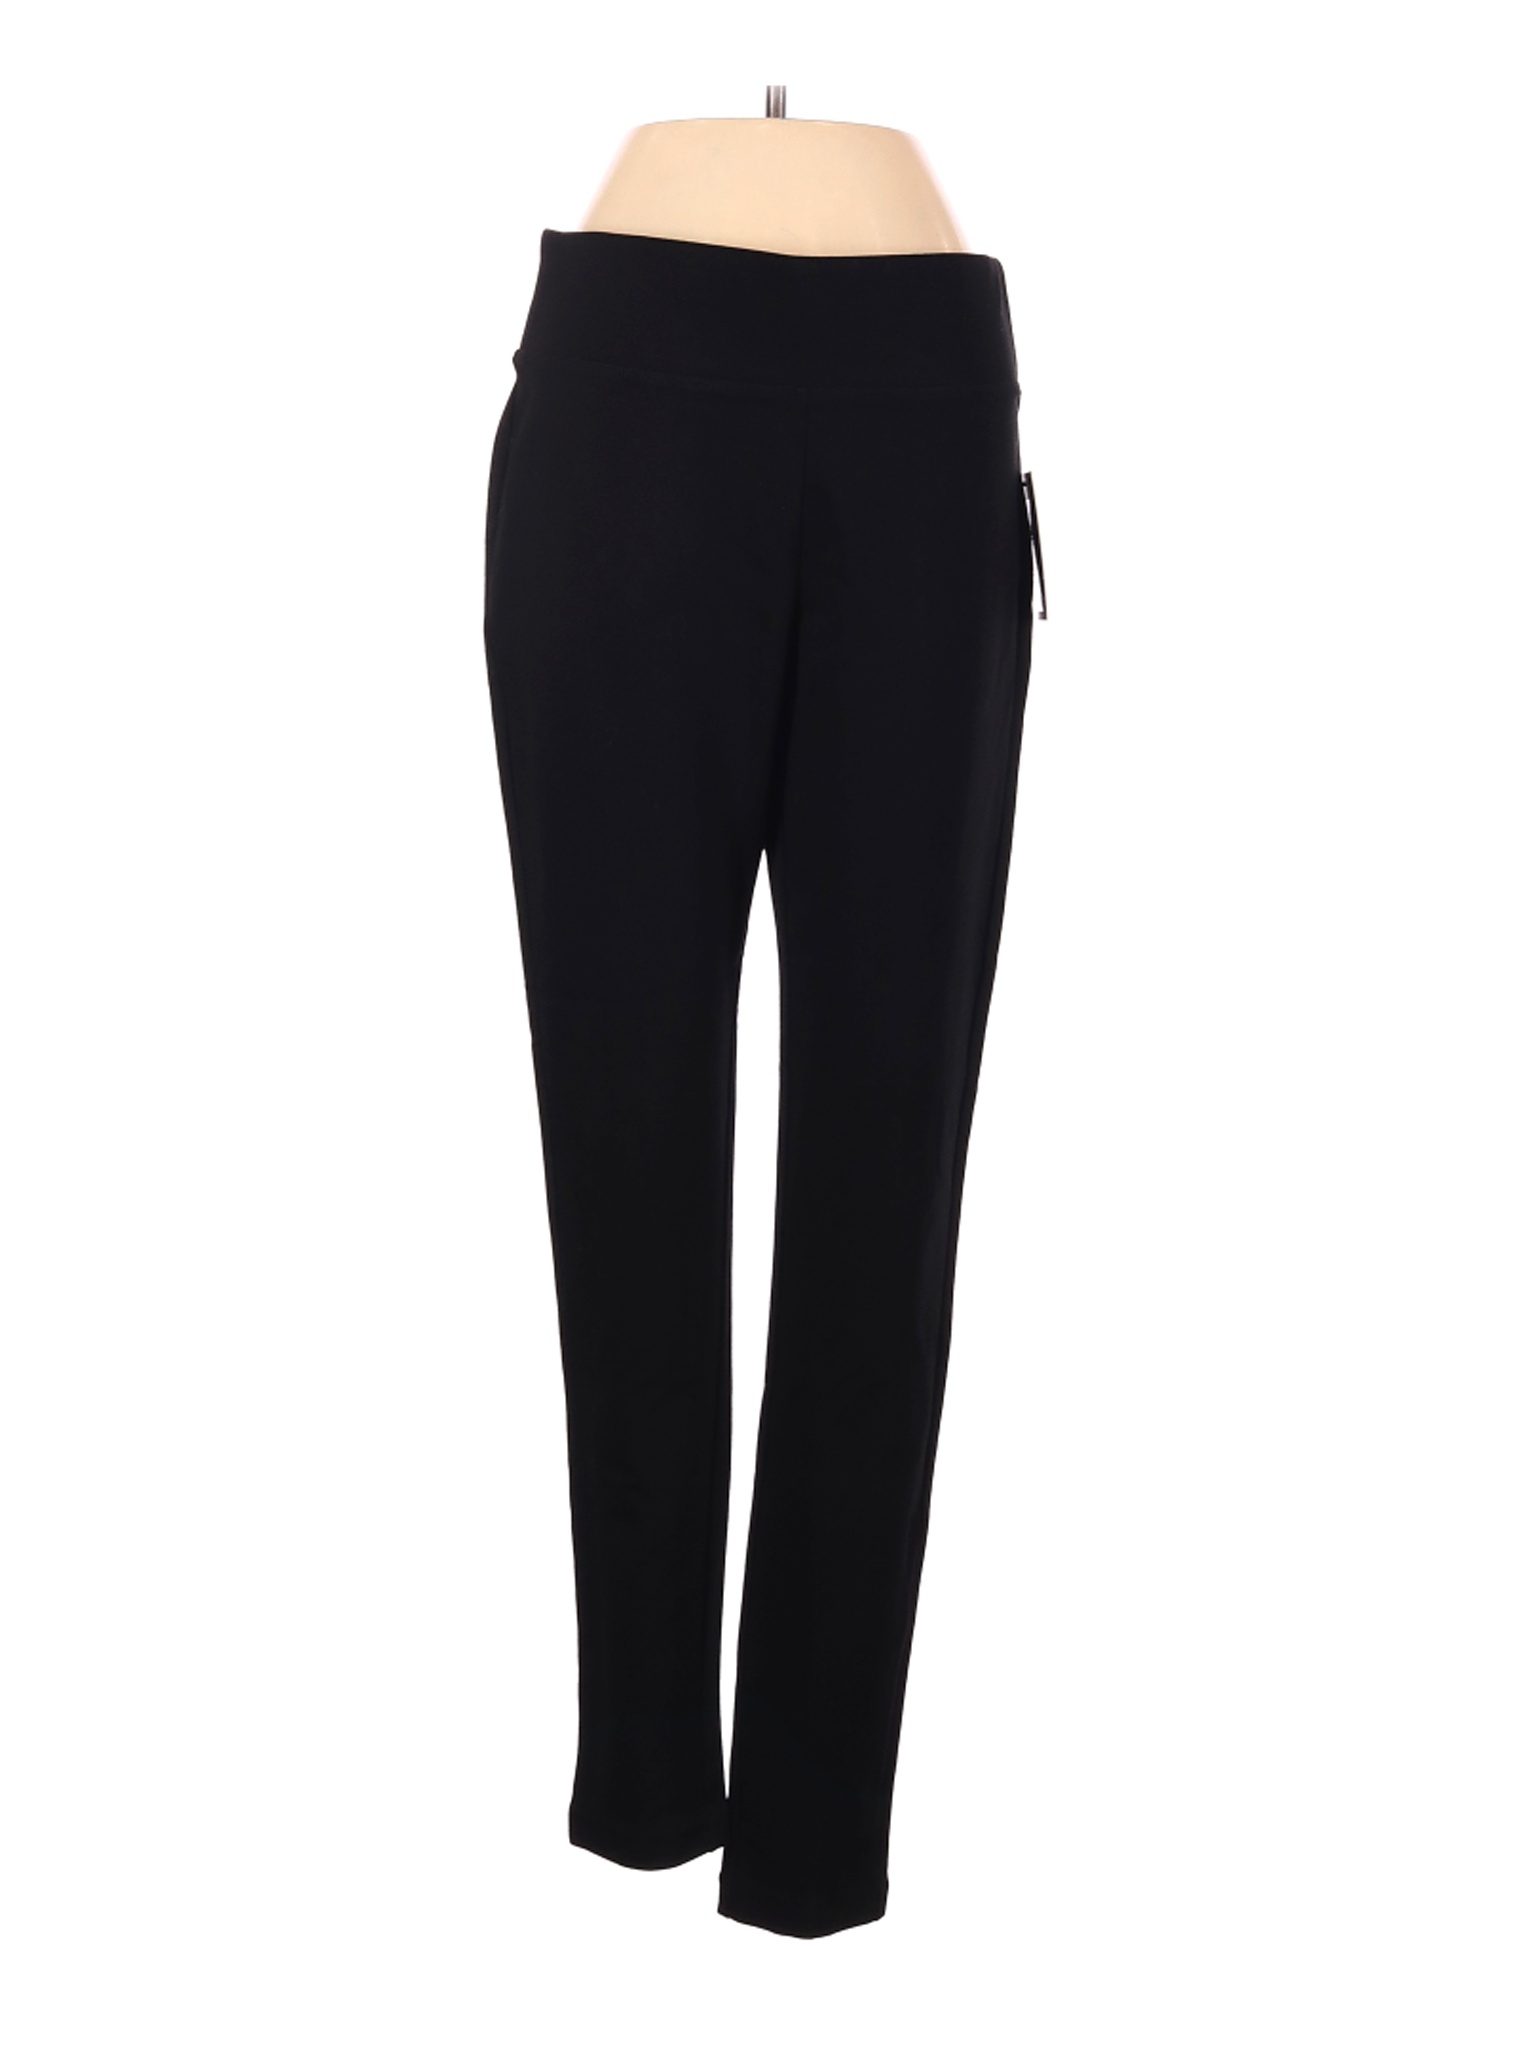 NWT Chaus Women Black Casual Pants S | eBay